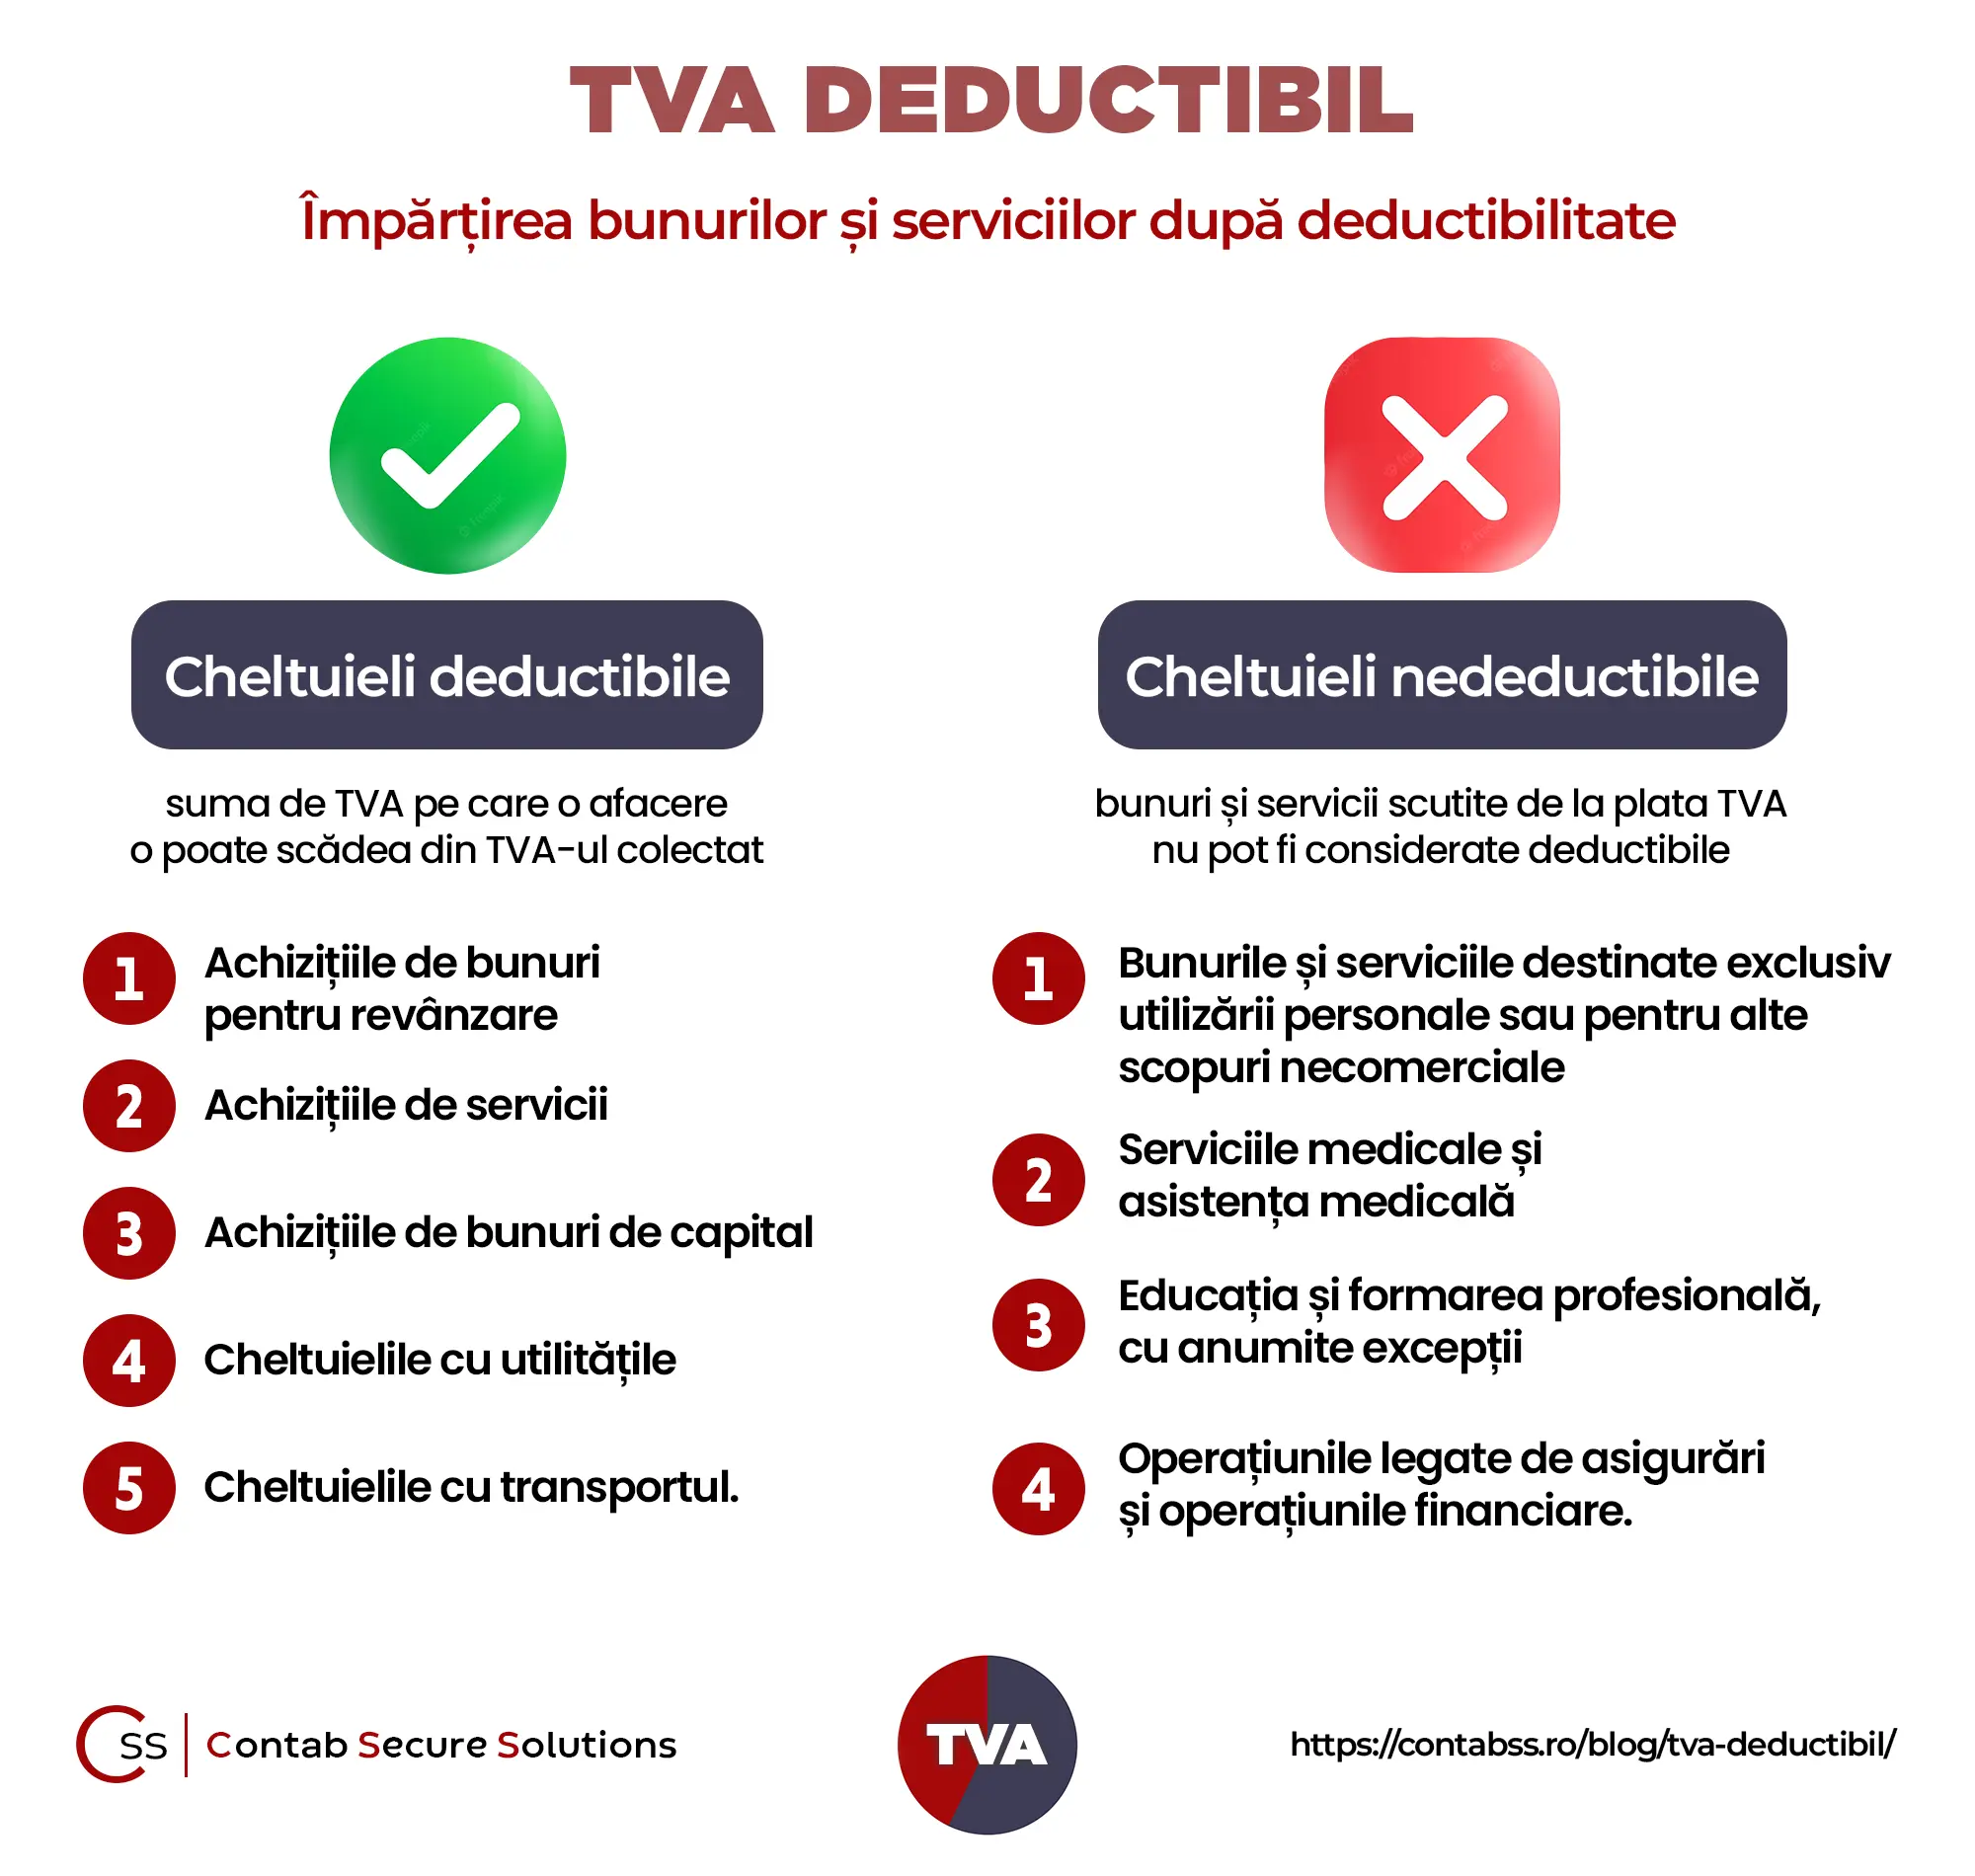 TVA deductibil - Impartirea bunurilor si serviciilor dupa deductibilitate